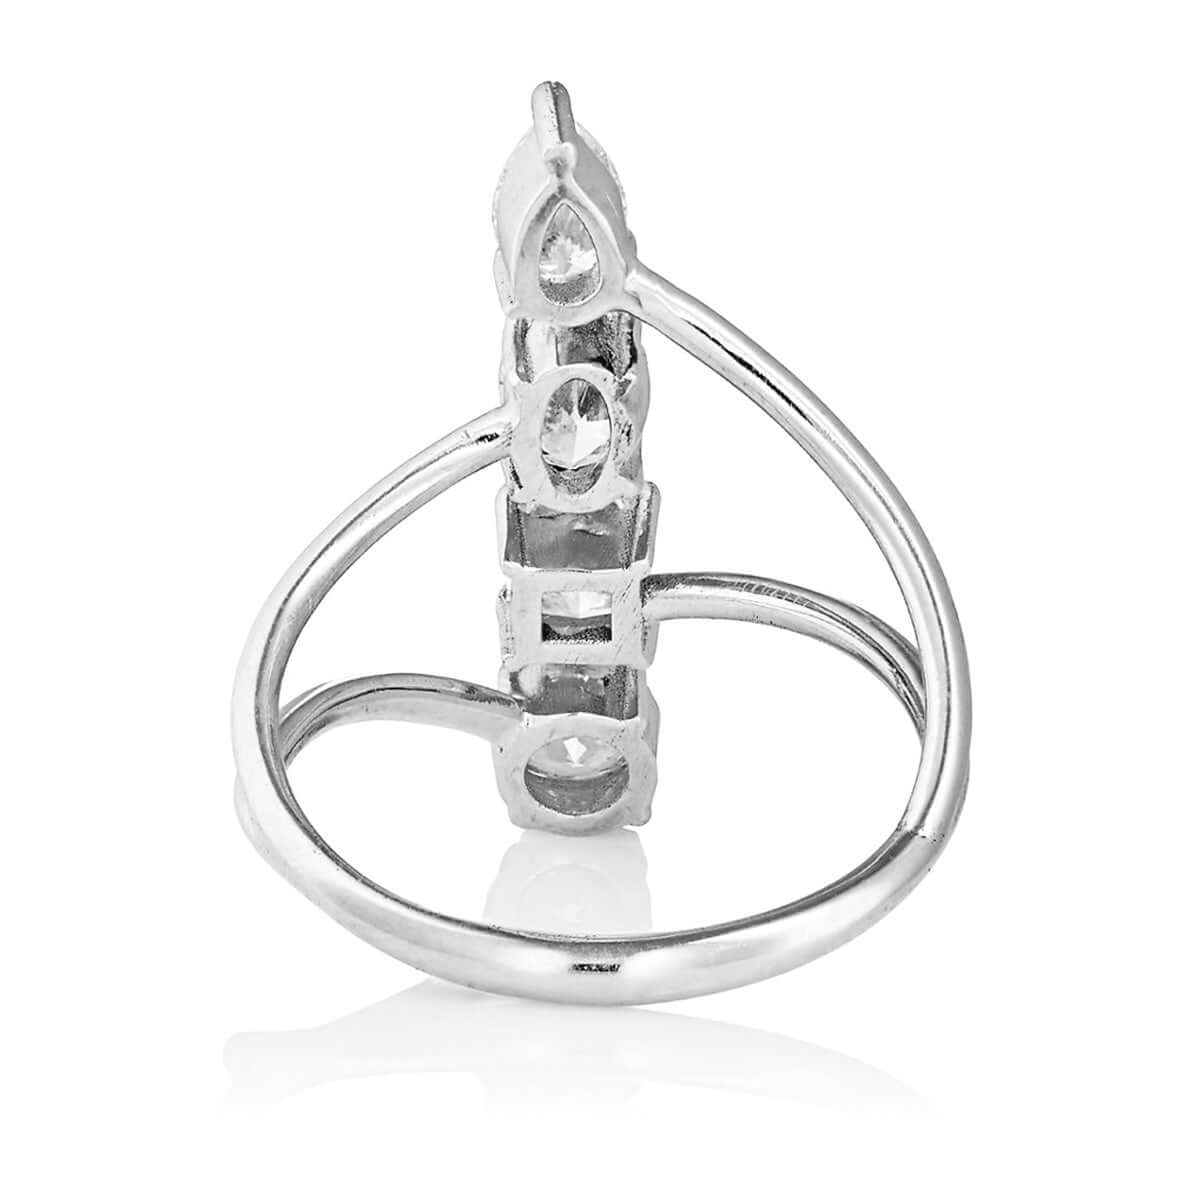 Diamond End Ring - Deco - Ileana Makri store